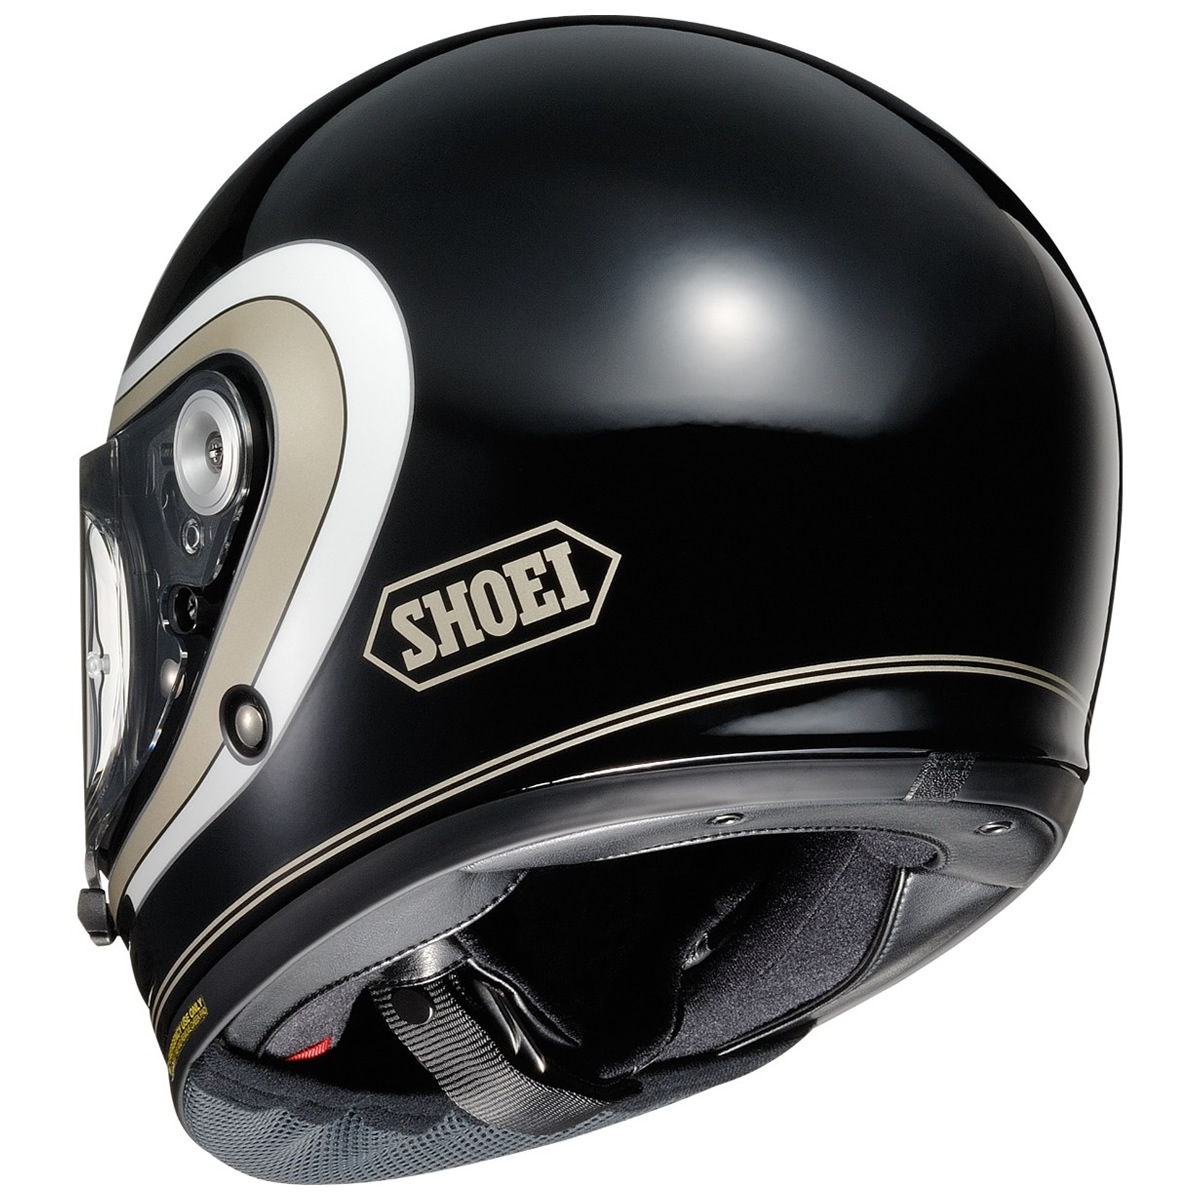 Shoei Glamster 06 Bivouac Helm, schwarz-weiß-gold